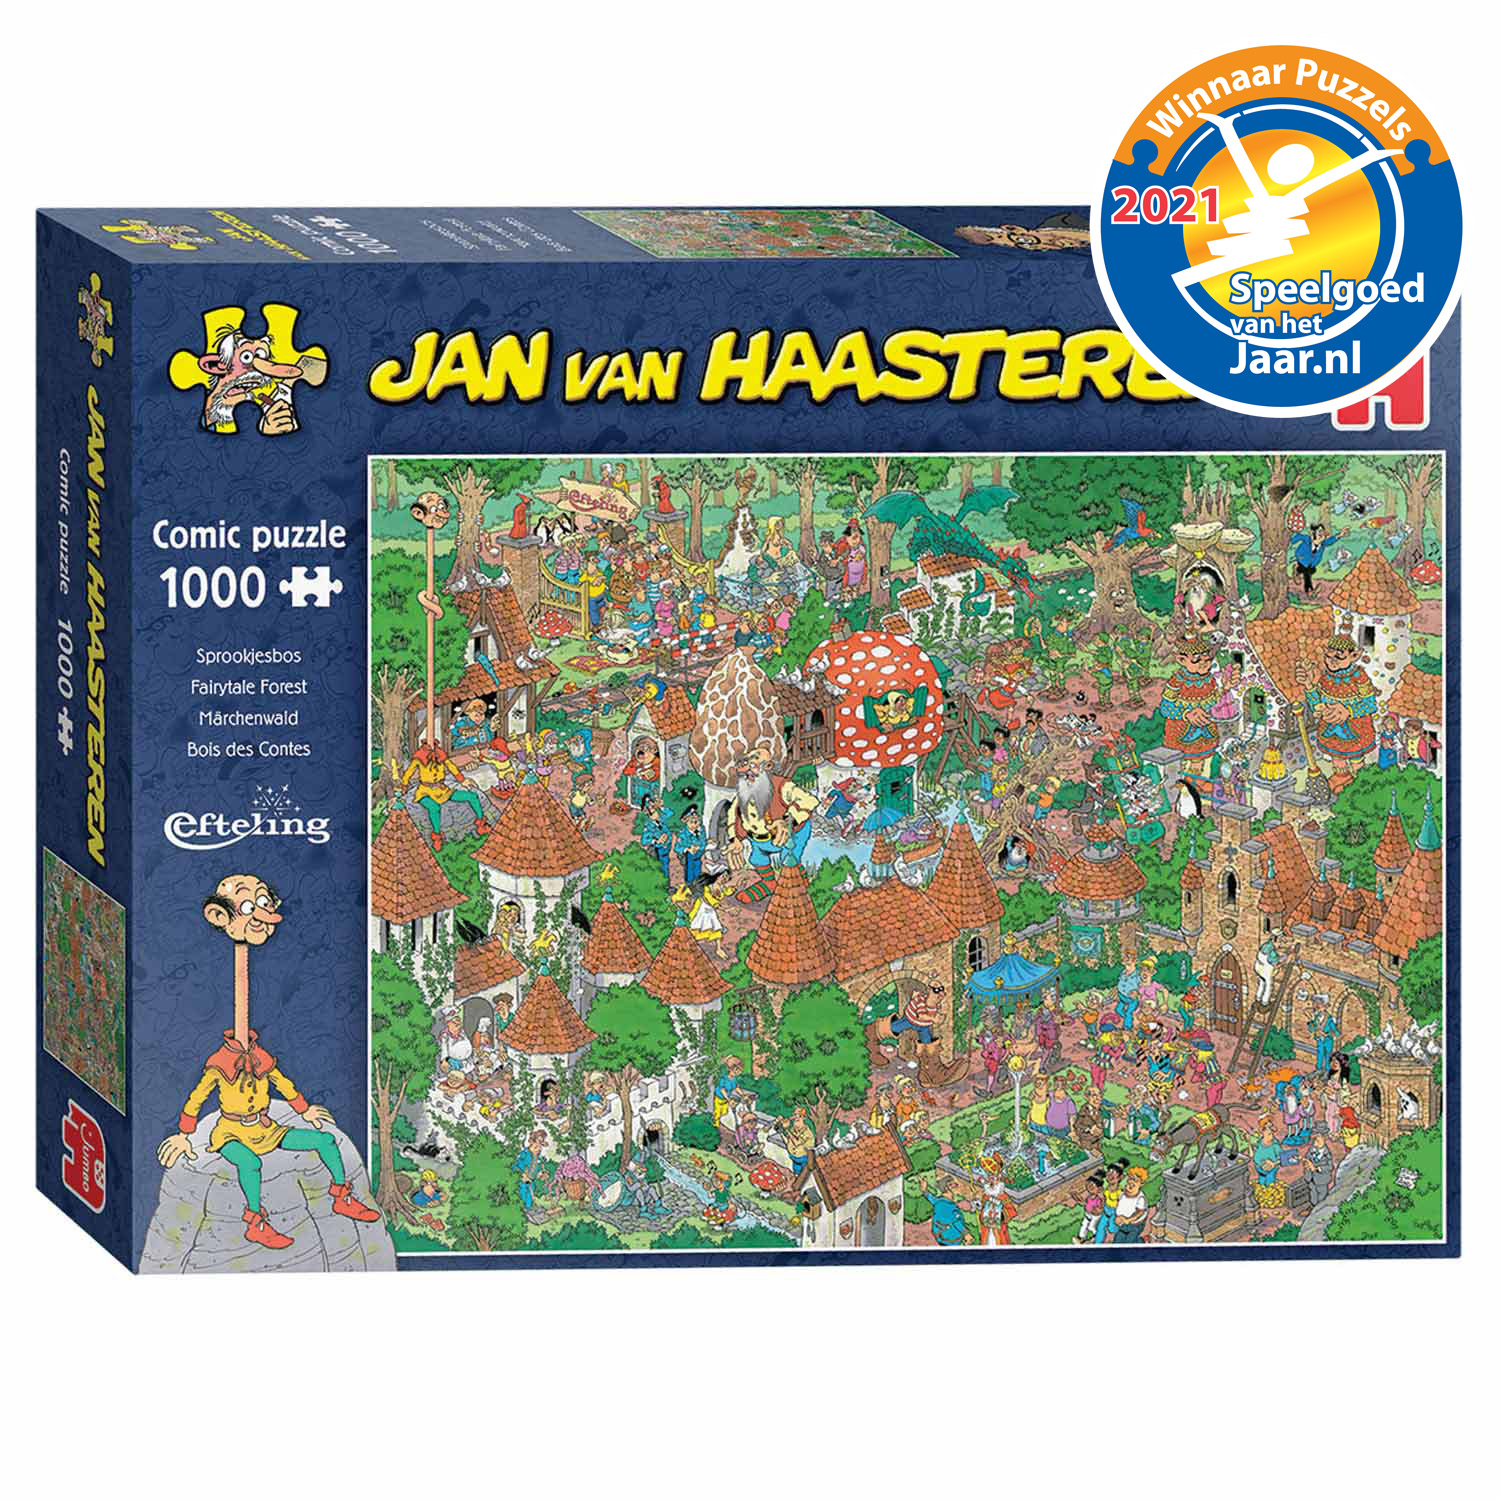 Jan van Haasteren Puzzle - Efteling-Märchenwald, 1000 Teile.